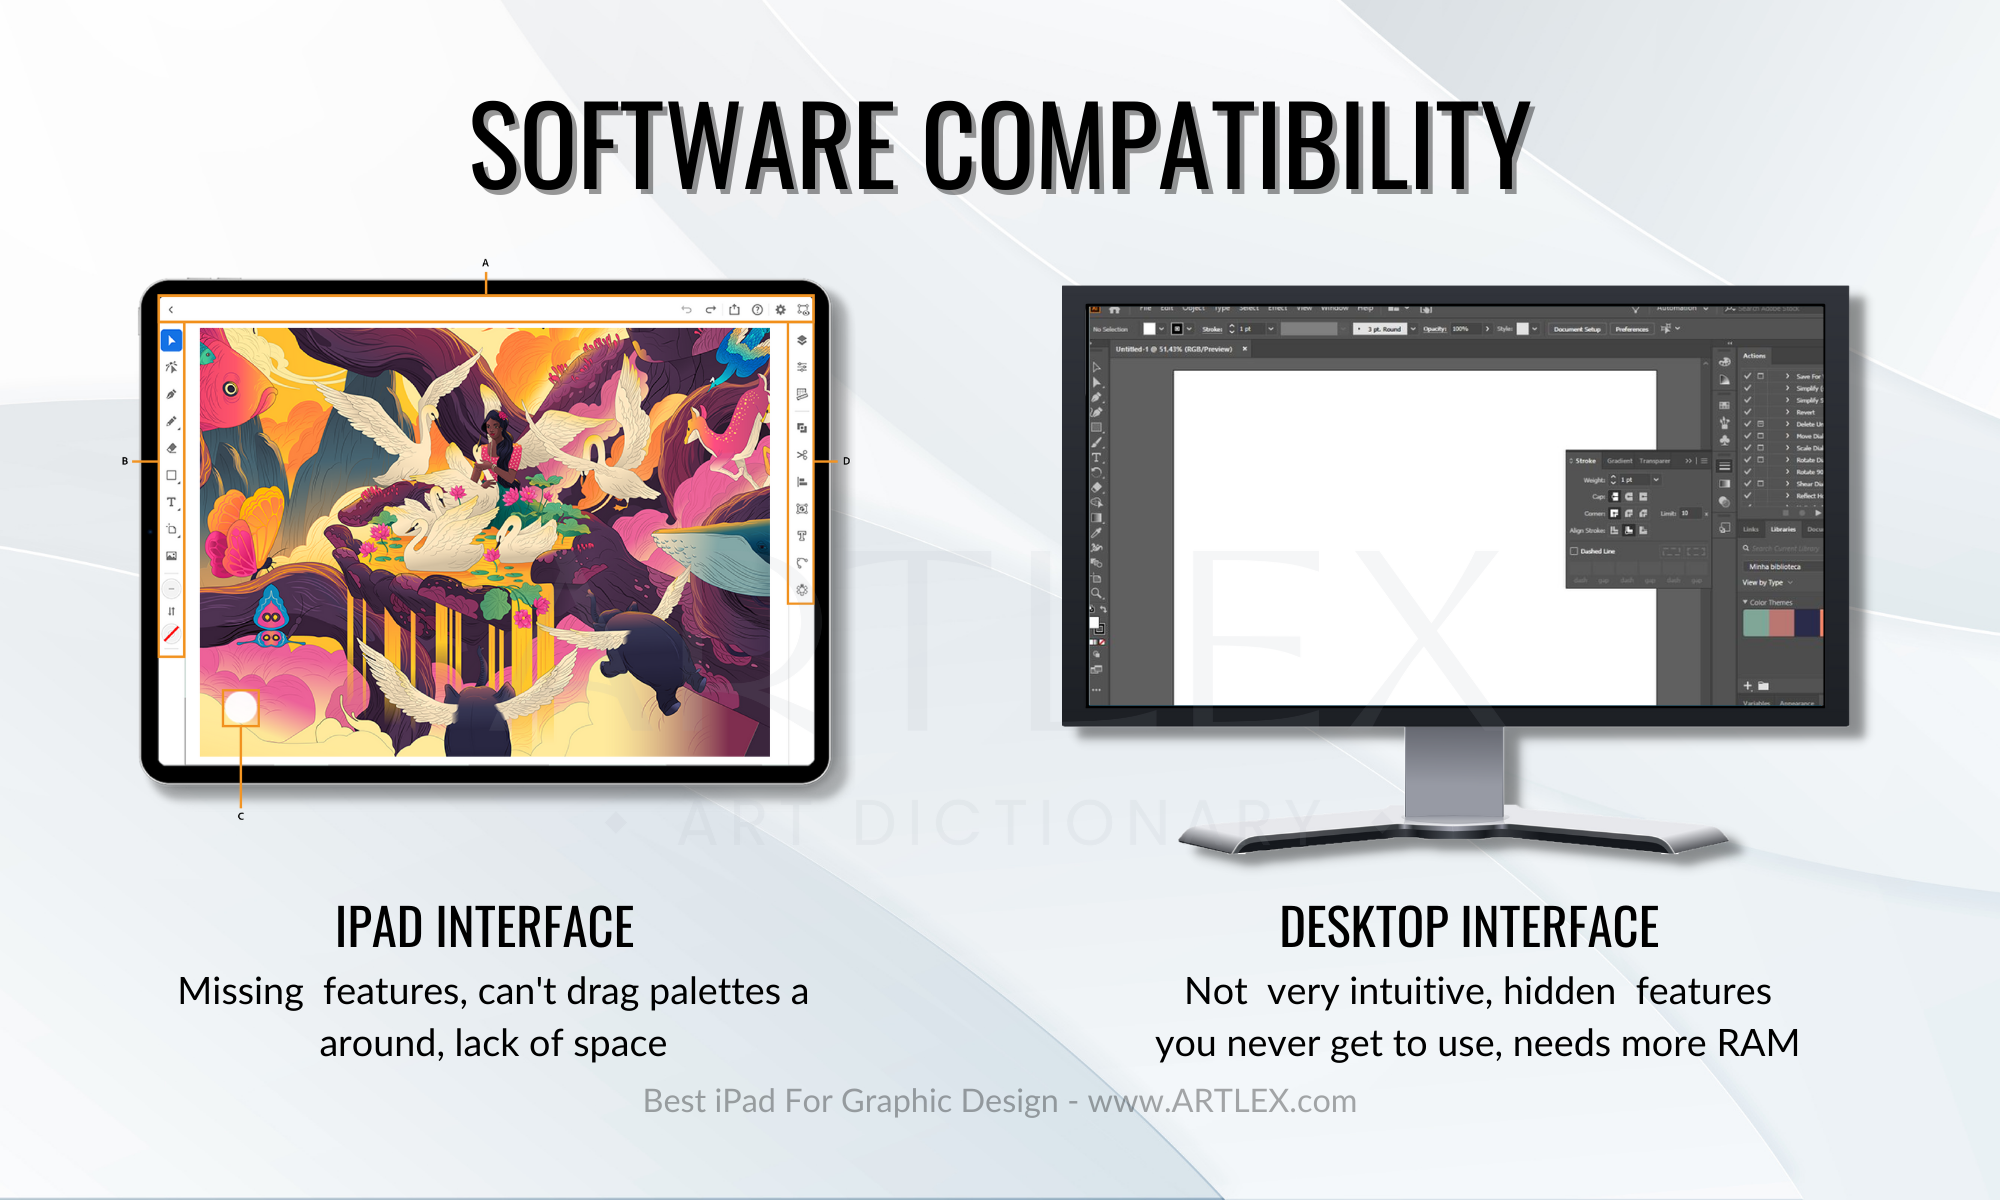 iPad Software Compatibility for Graphic Design